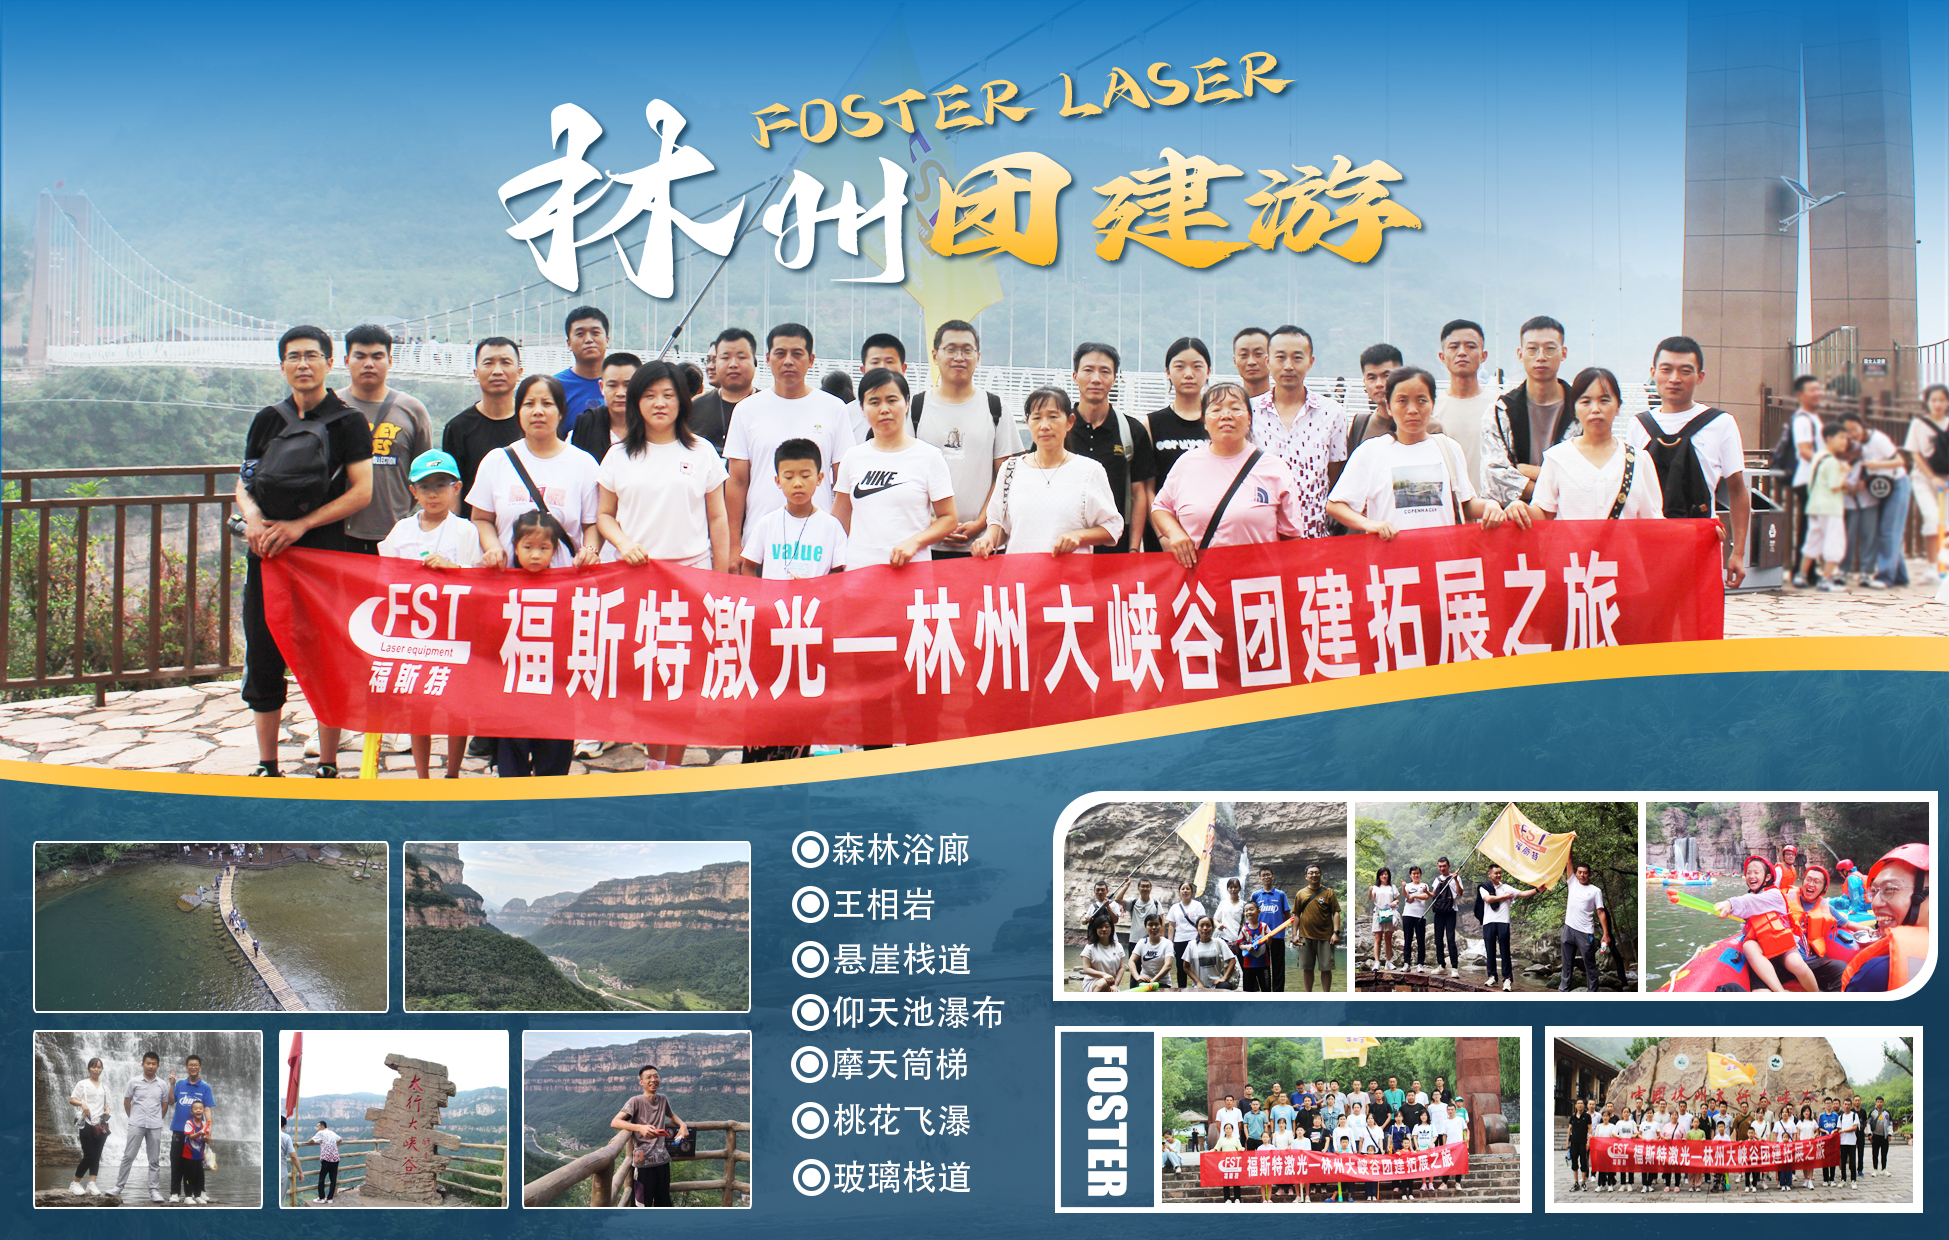 Foster Laser Technology Prioritas Company: Unforgettable Tim-gedong mundur di Henan Daxiagu